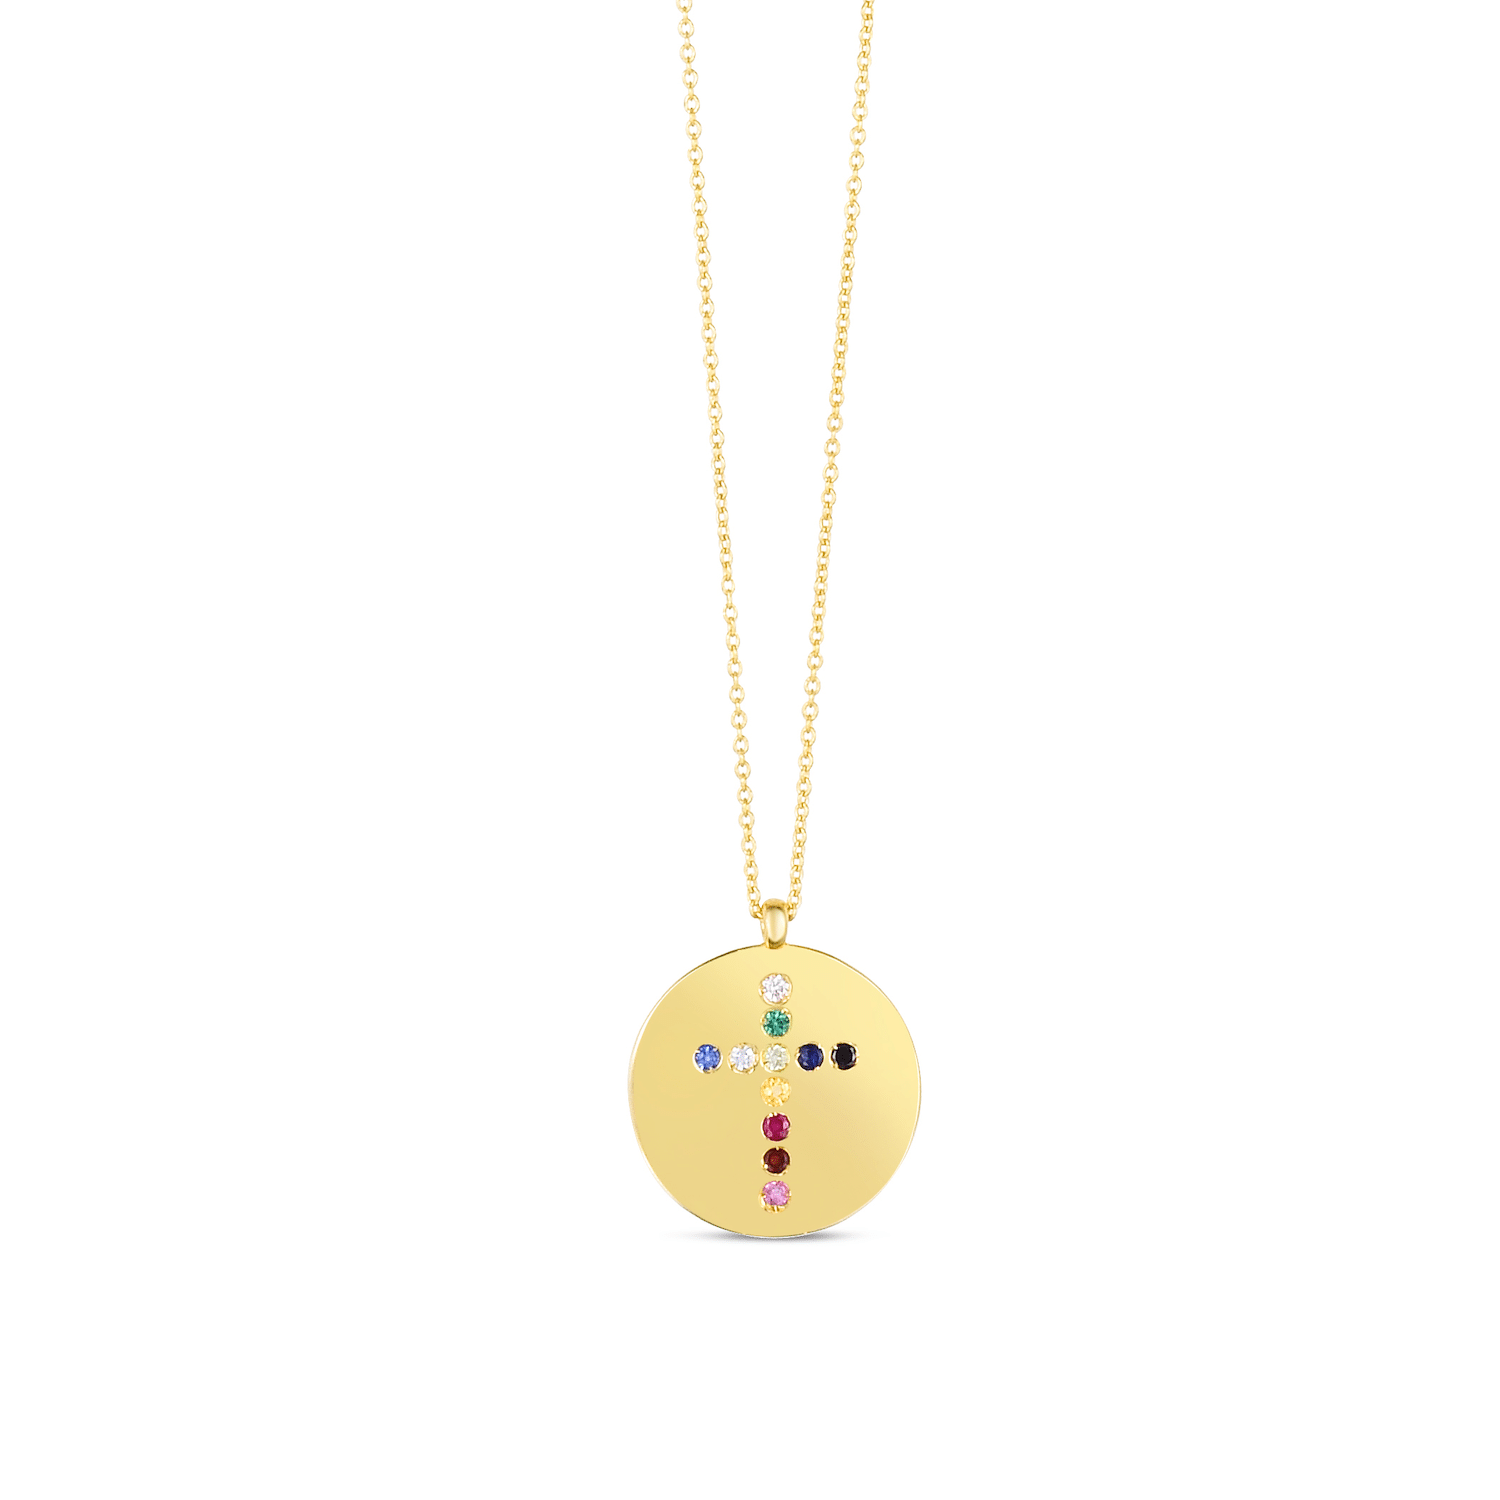 14K Yellow Gold Gemstone Diamond Cross Pendant Medallion Chain Necklace 16"-18"